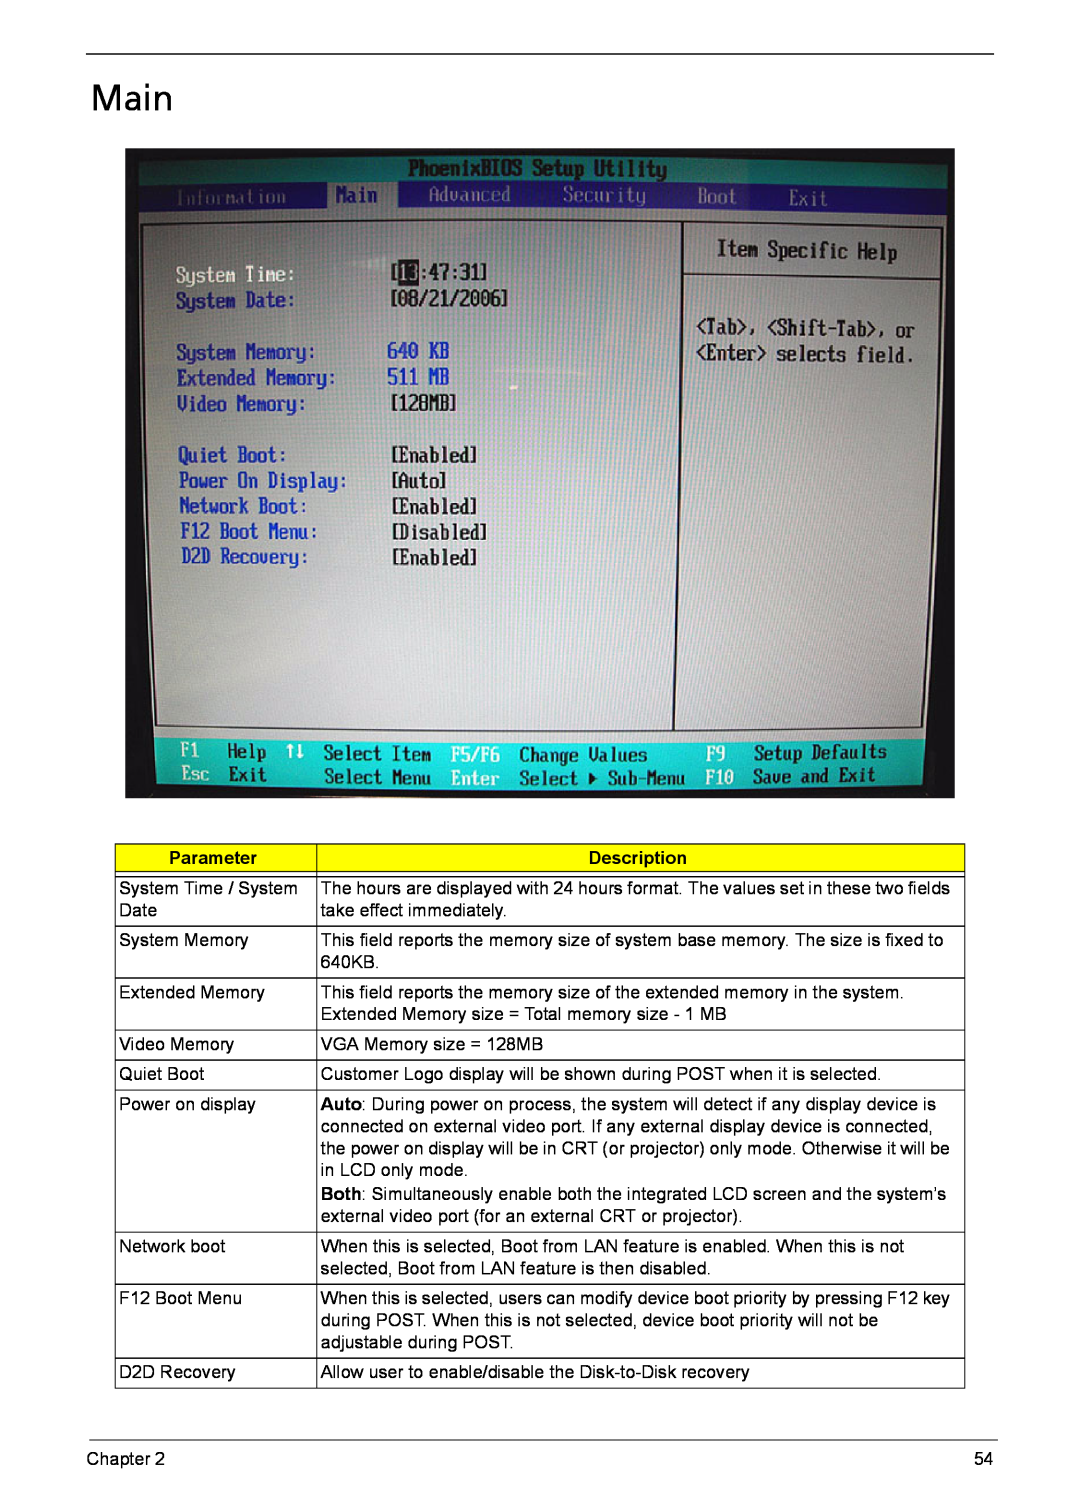 Acer 6410, 6460 manual Main, Parameter, Description 